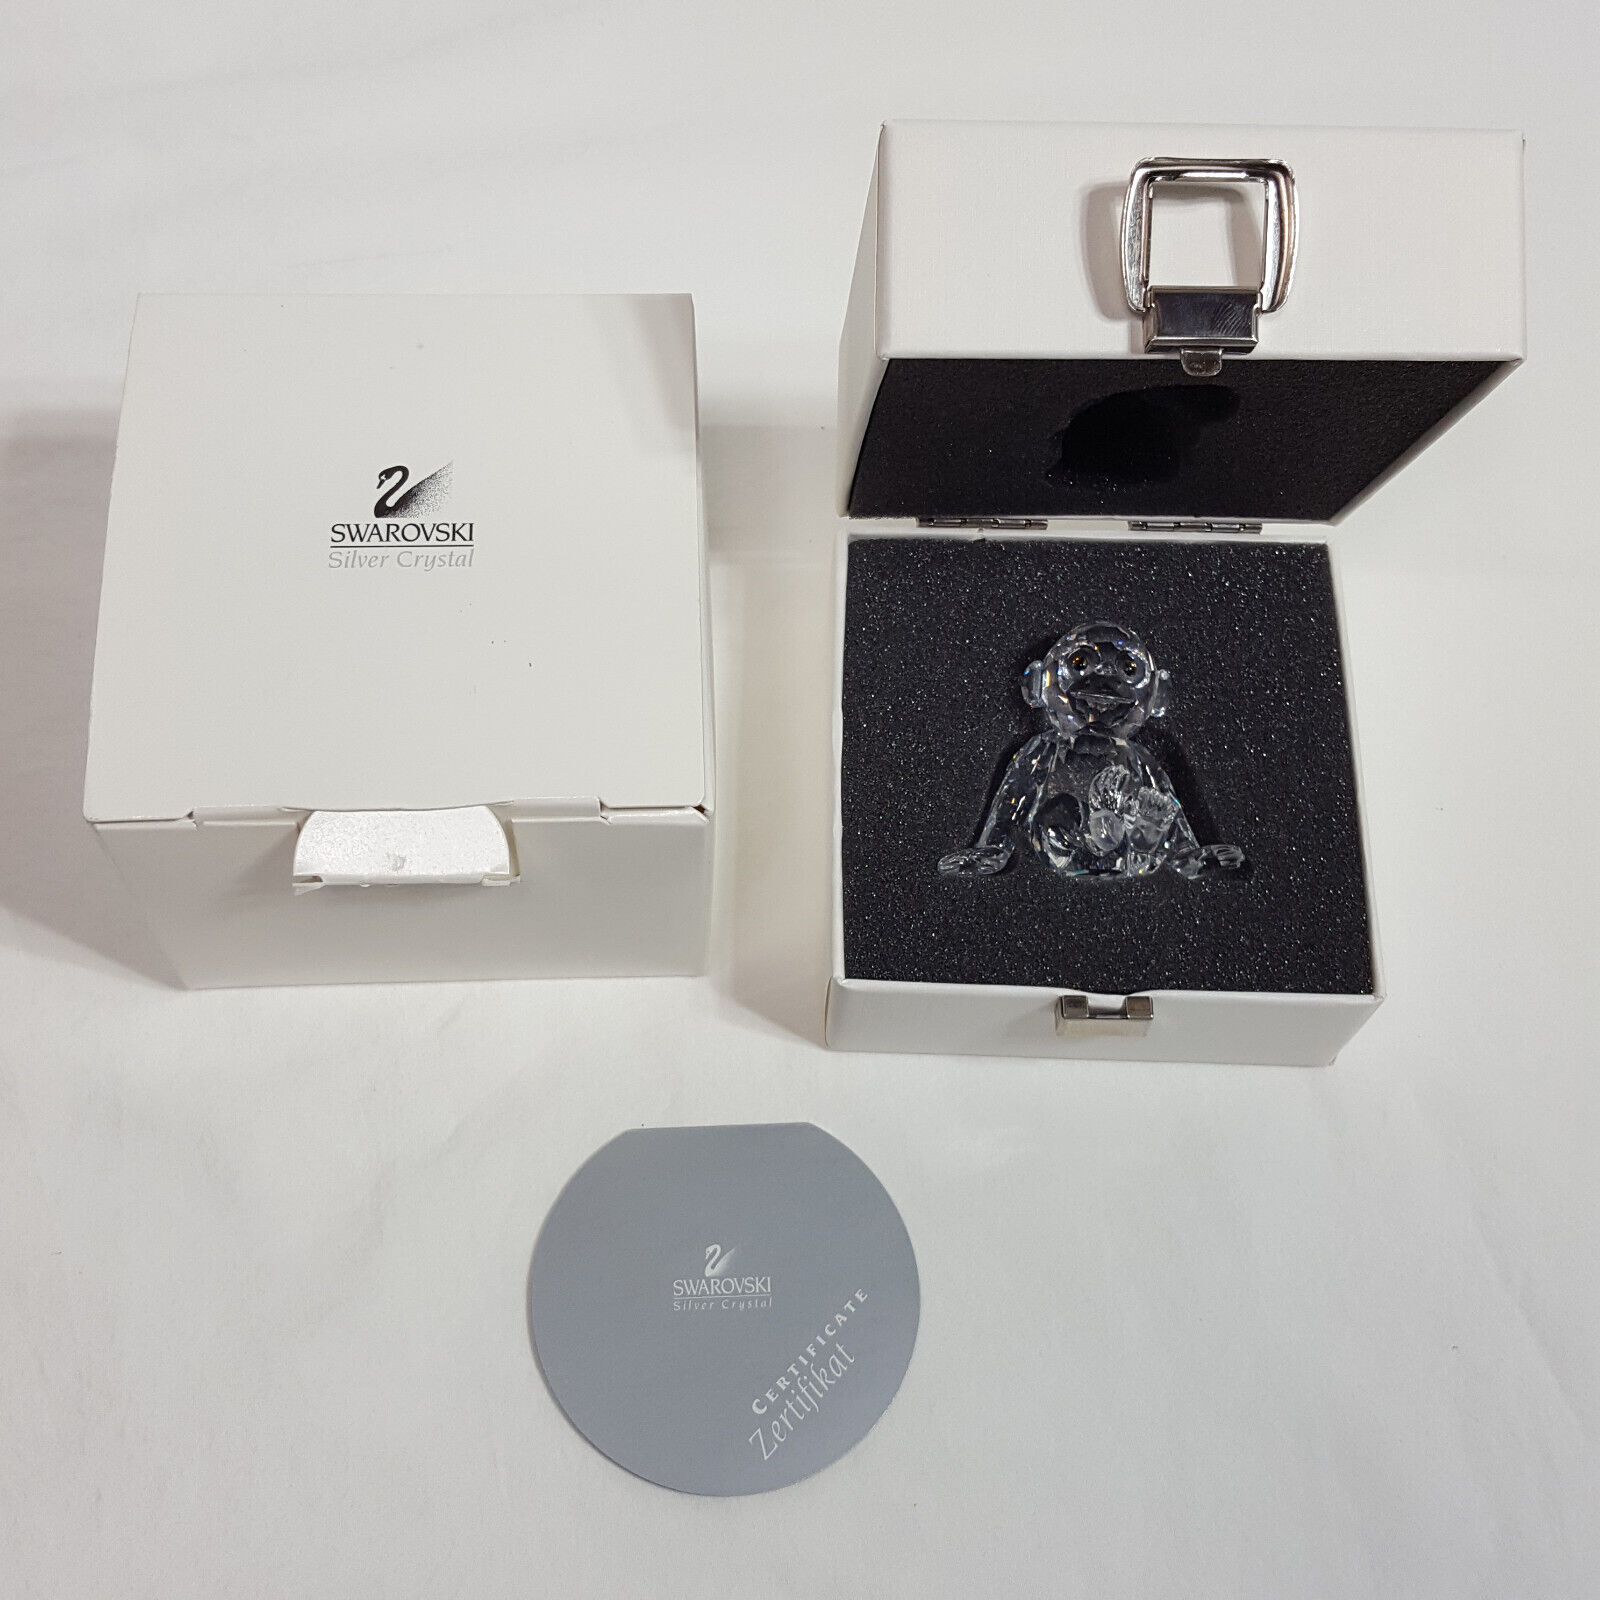 Swarovski Silver Crystal Chimpanzee Figurine with Box and Certificate 7618